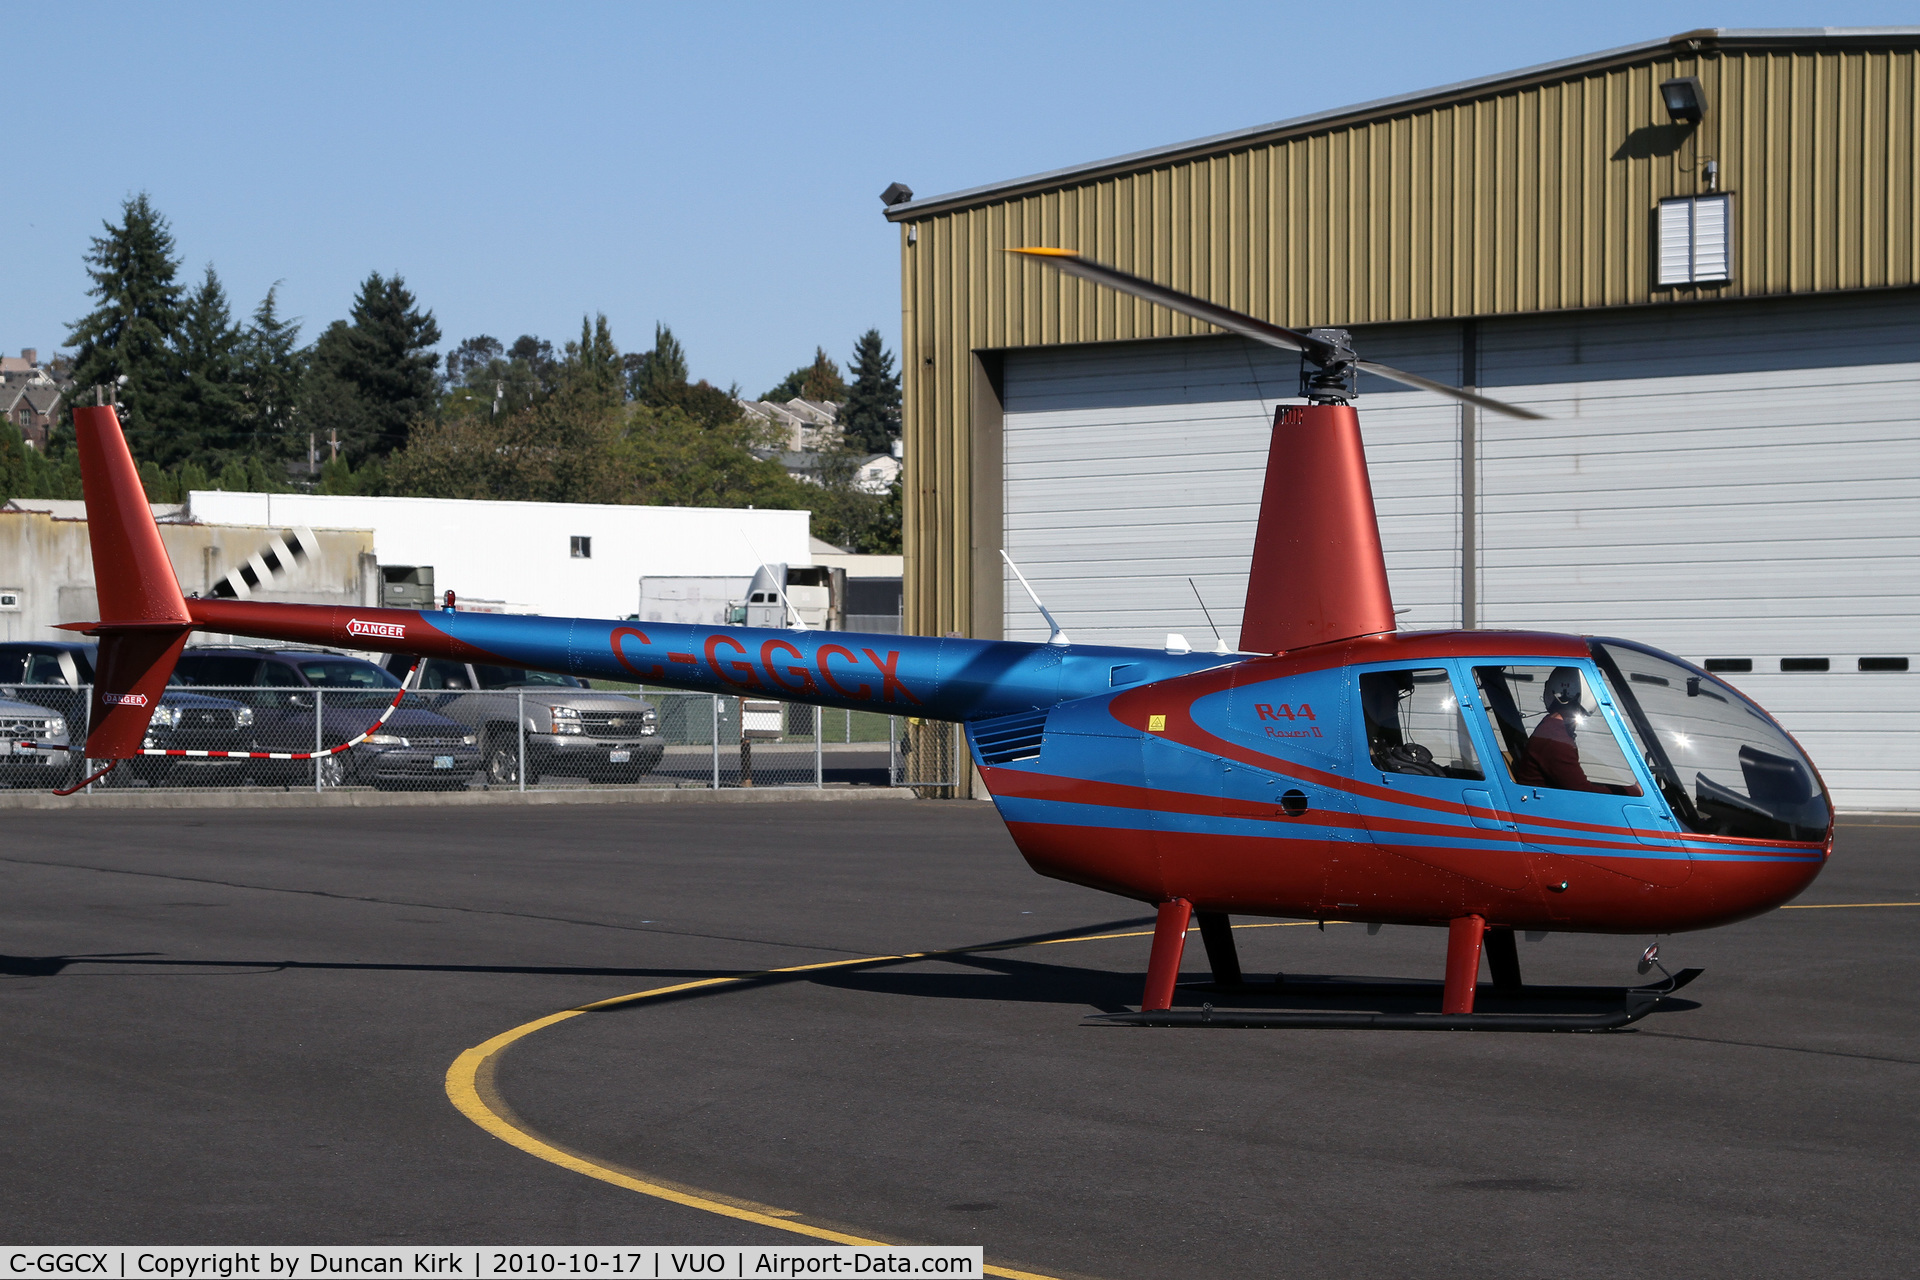 C-GGCX, Robinson R44 II C/N 12391, Nice colors on this Robinson